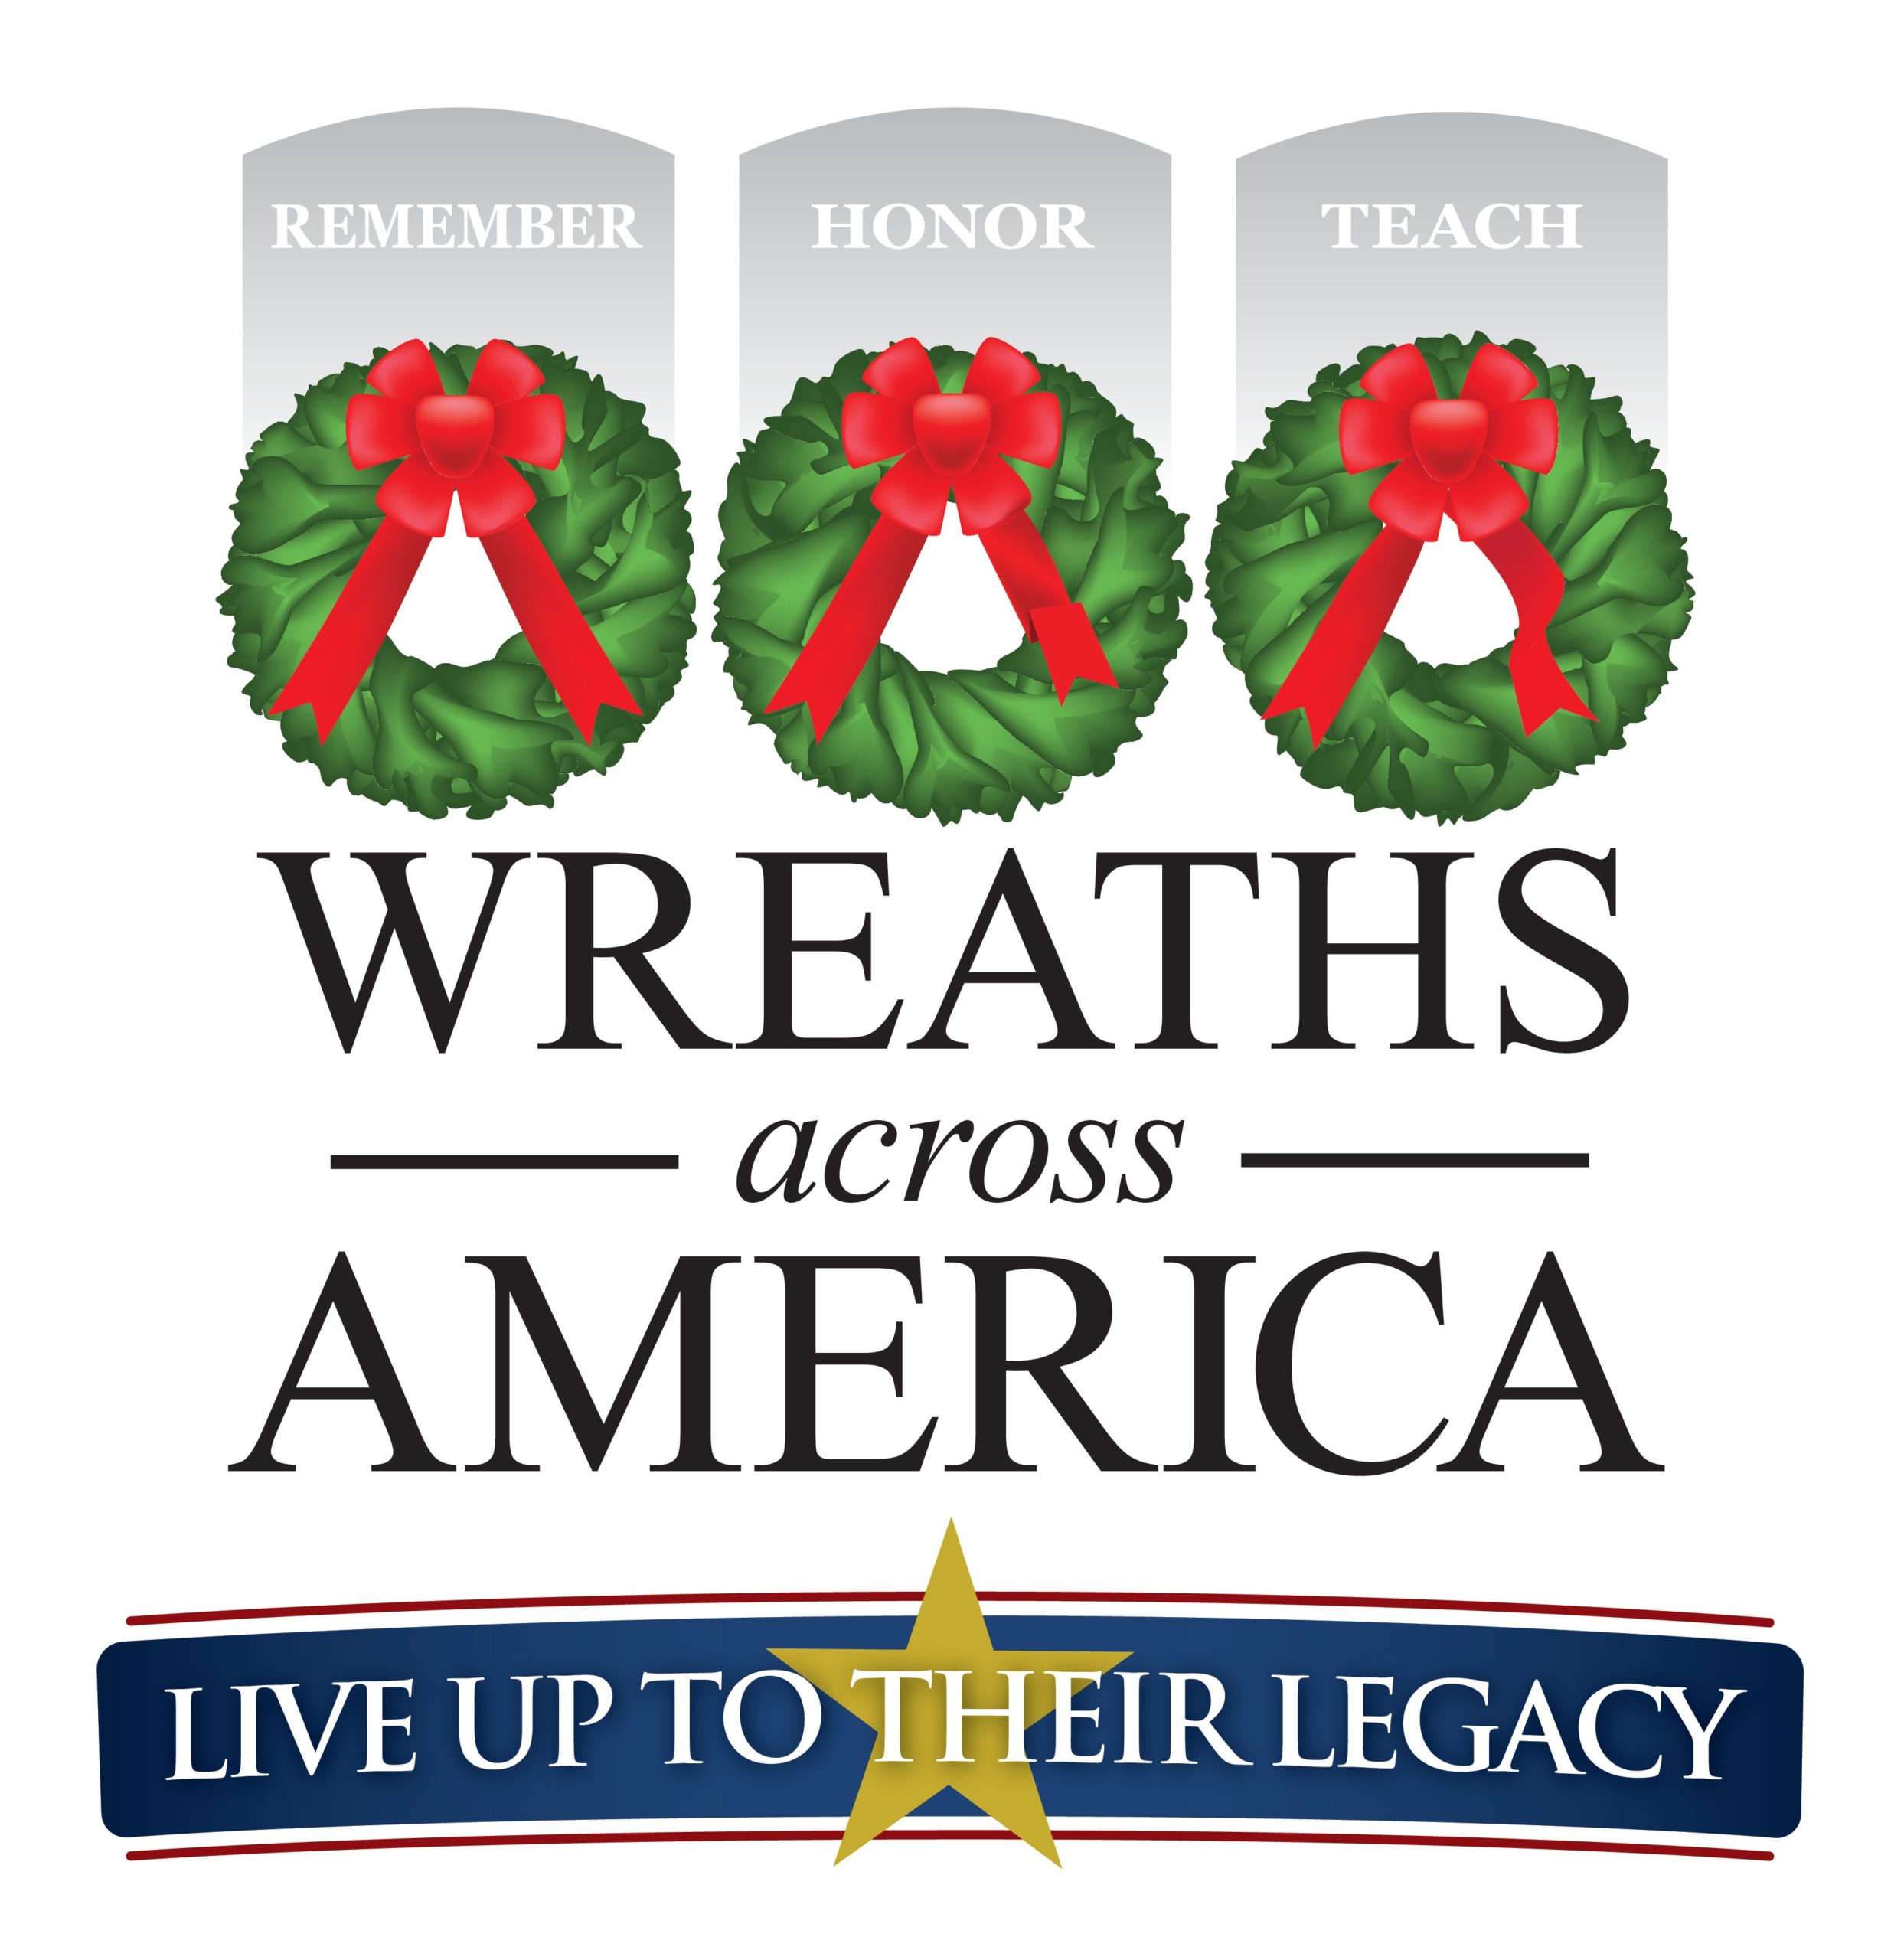 Wreaths across America 2021 logo image